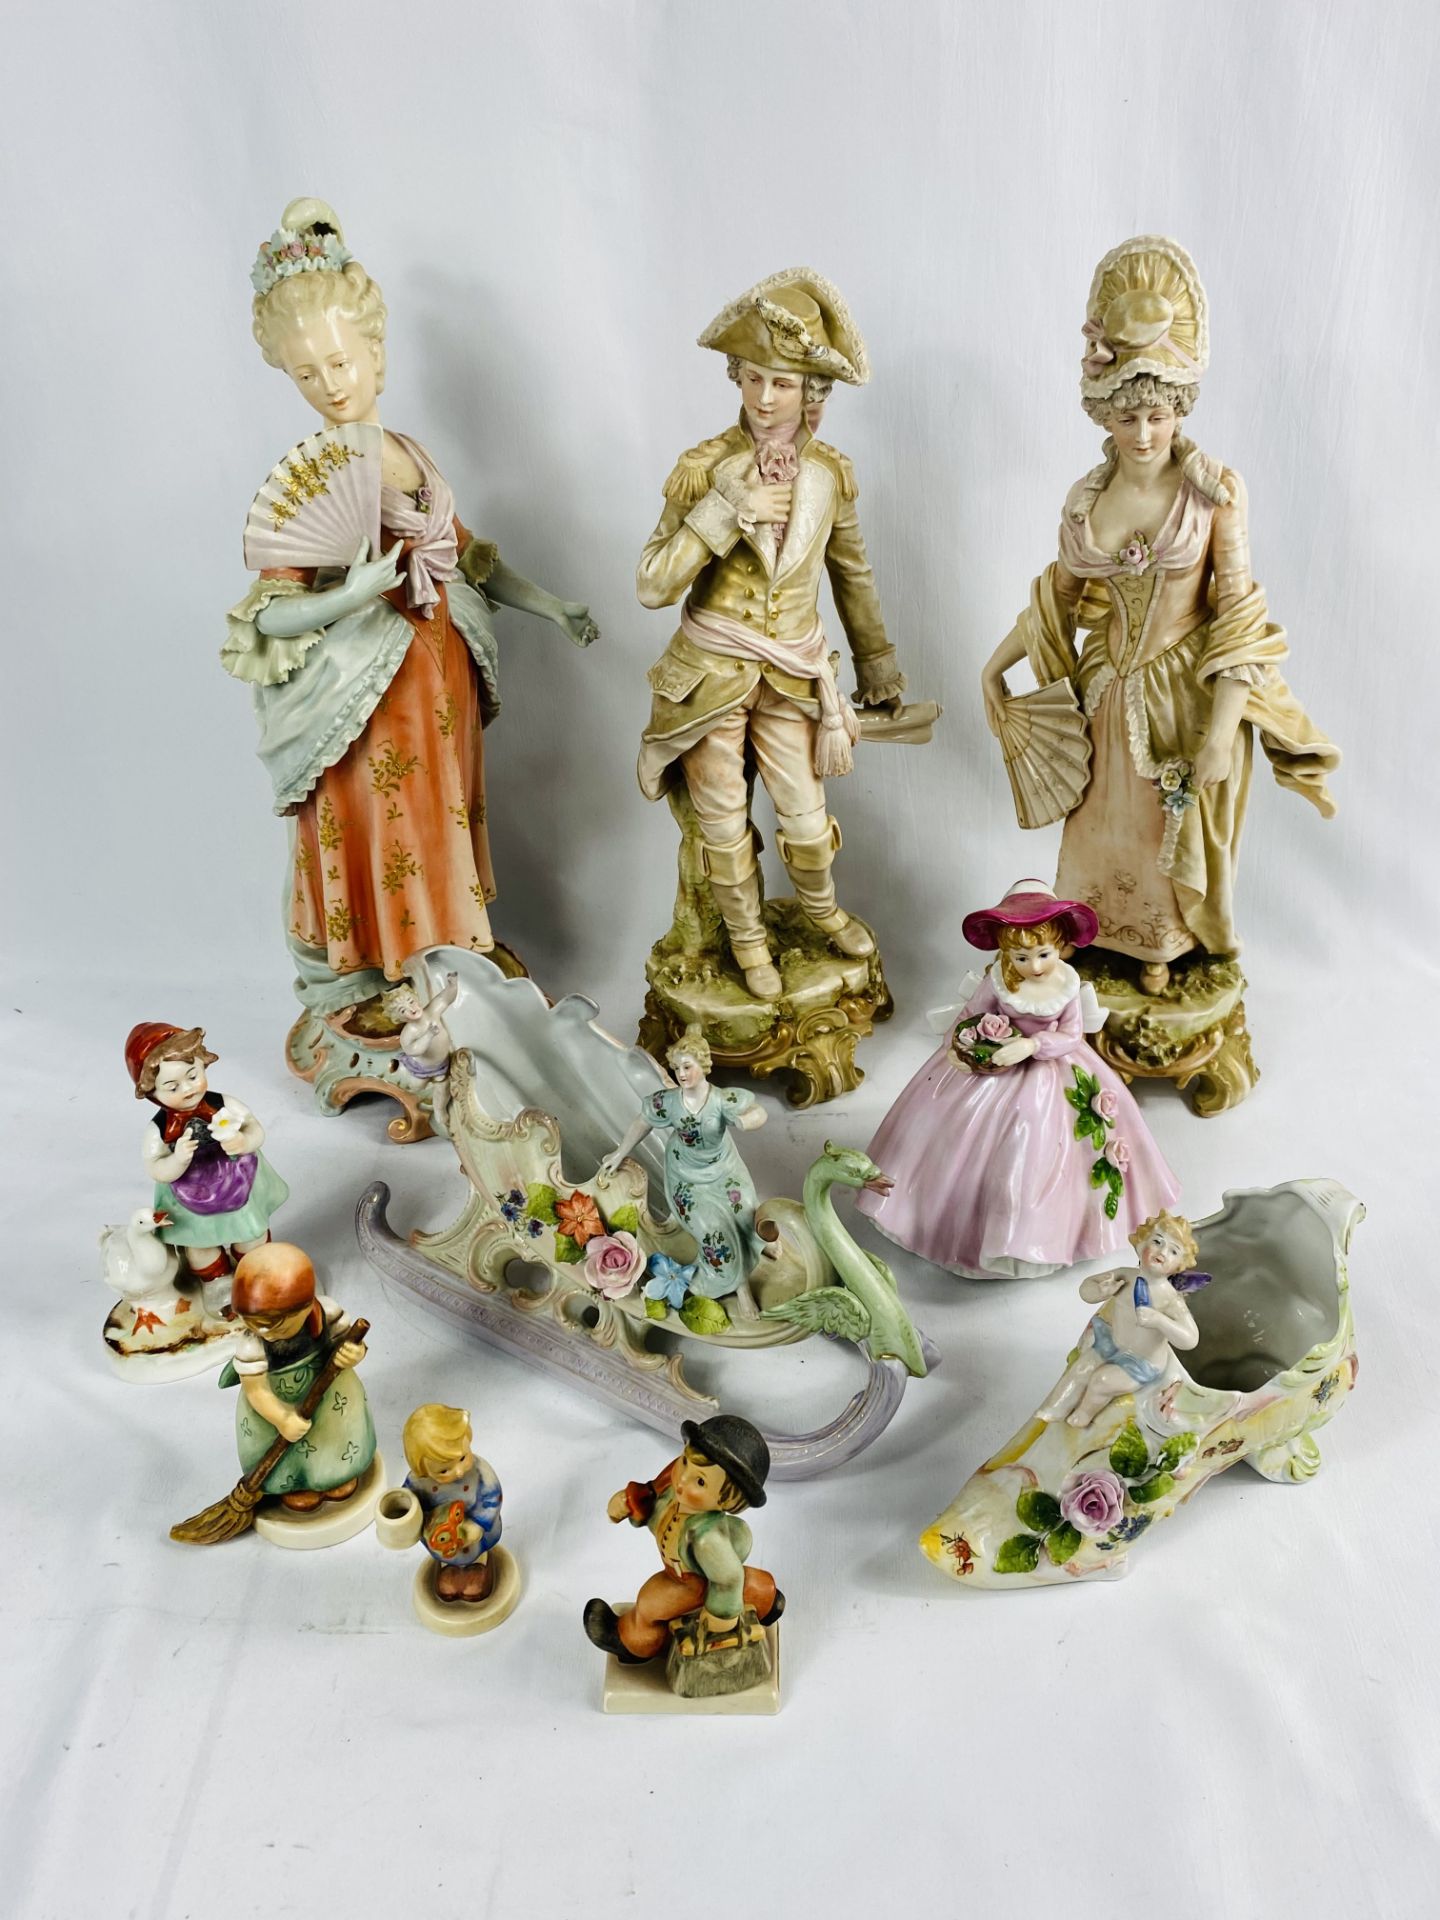 Quantity of porcelain figurines